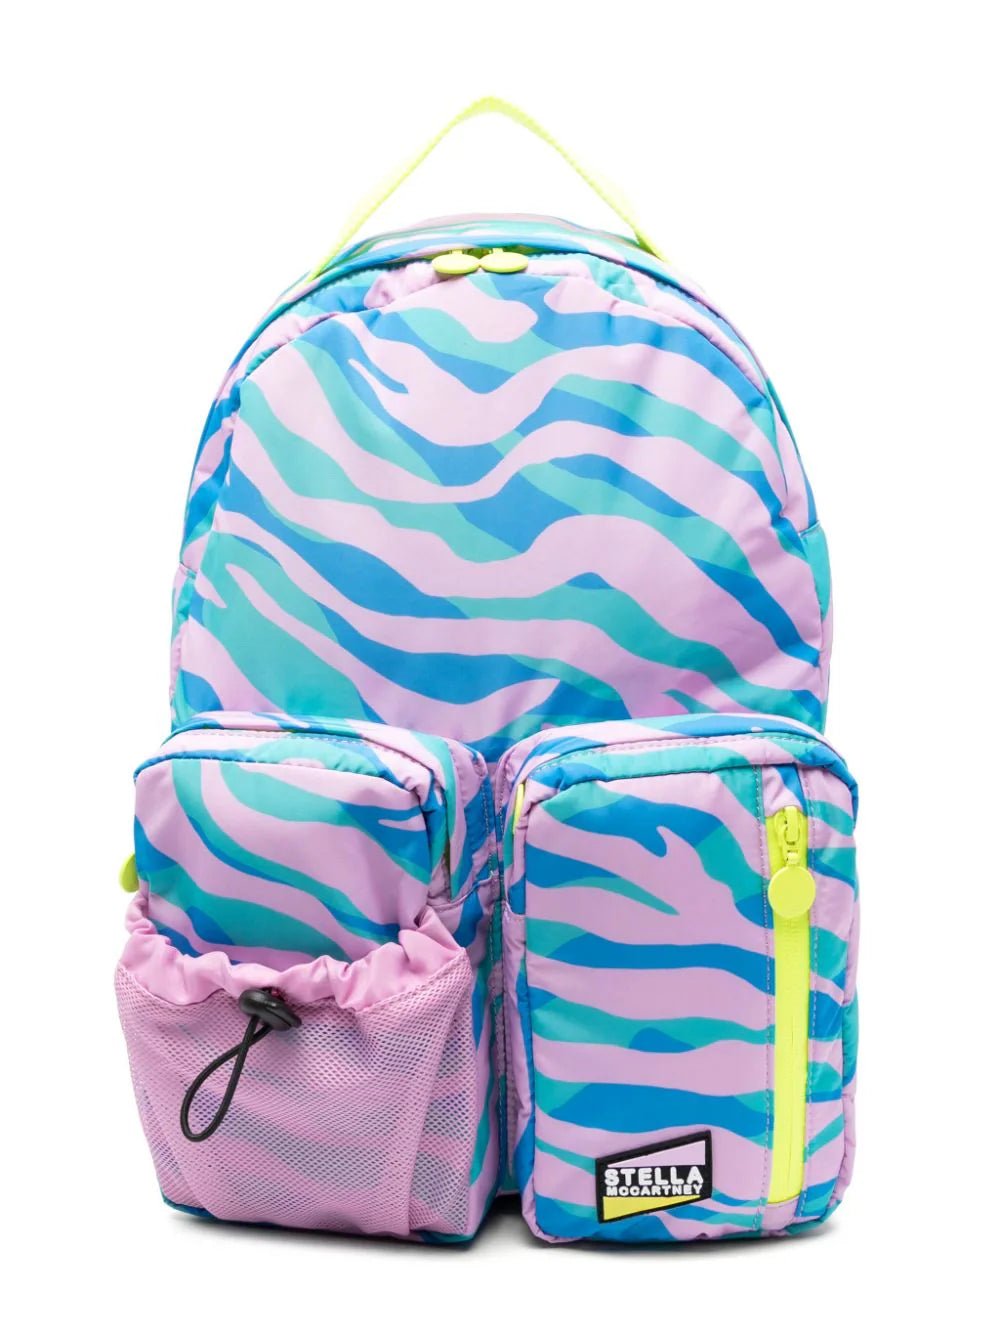 Zebra Sport Backpack - Pink - Posh New York